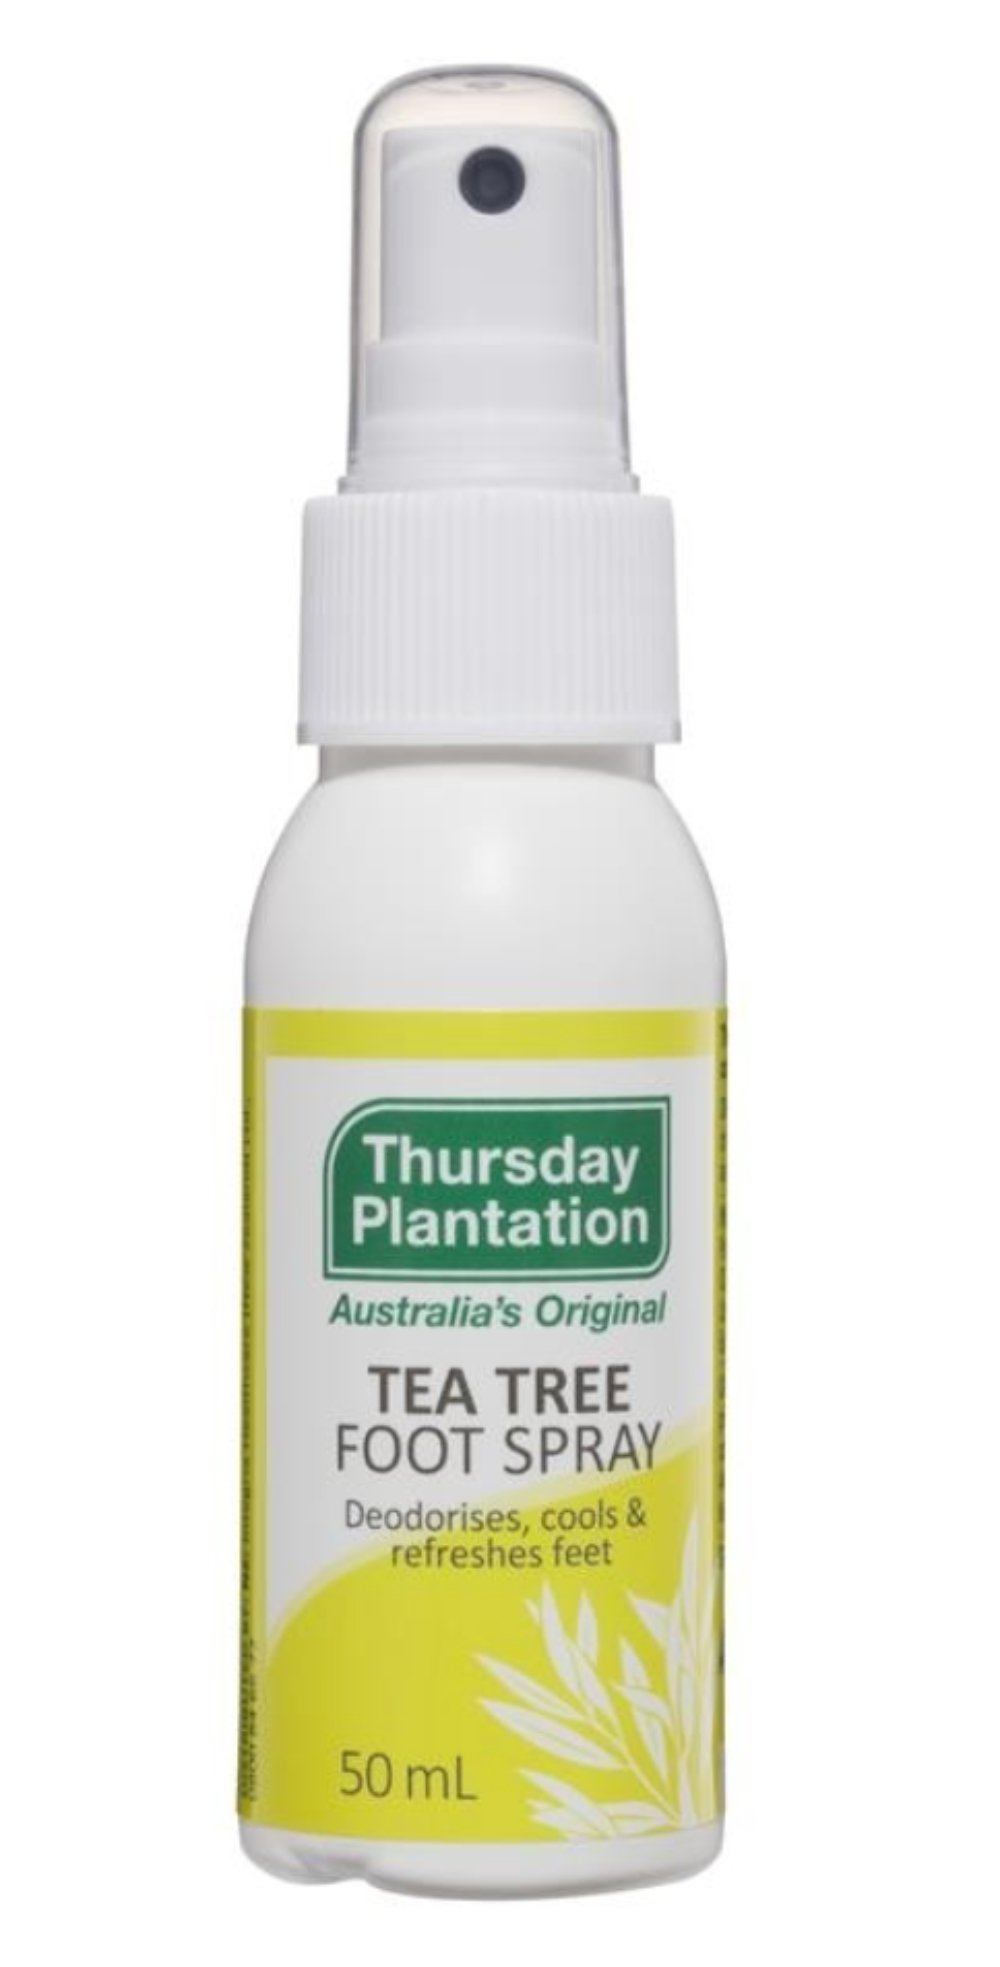 Thursday Plantation Tea Tree Foot Spray 50ml - The Face Method